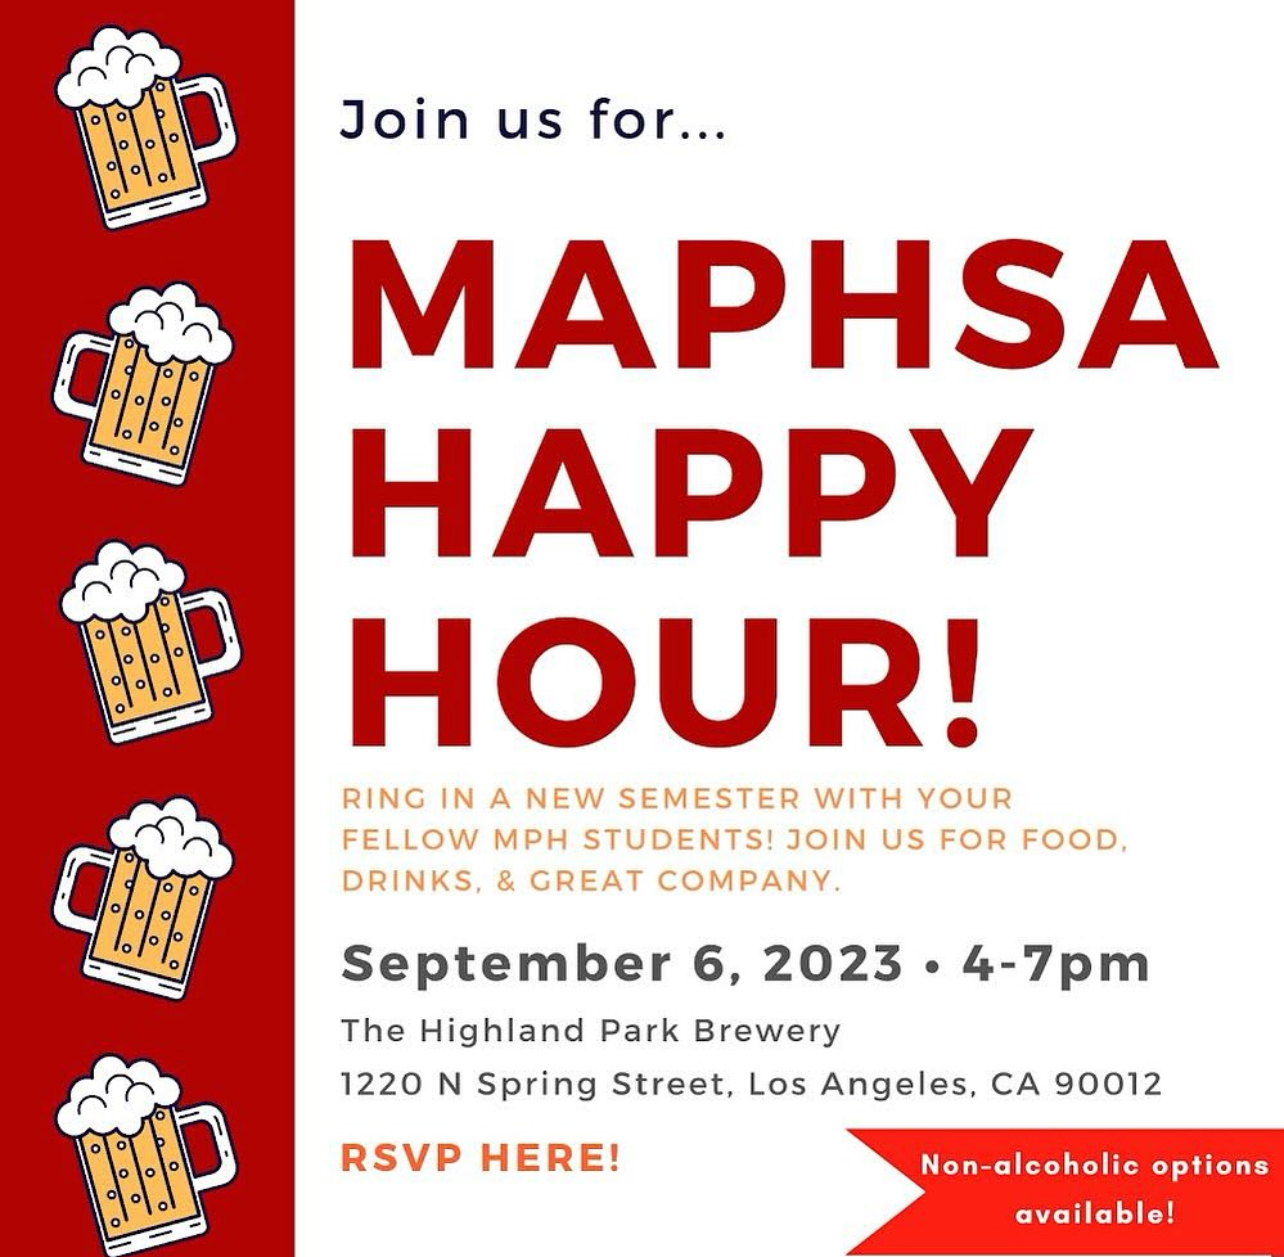 MaPHSA Happy Hour